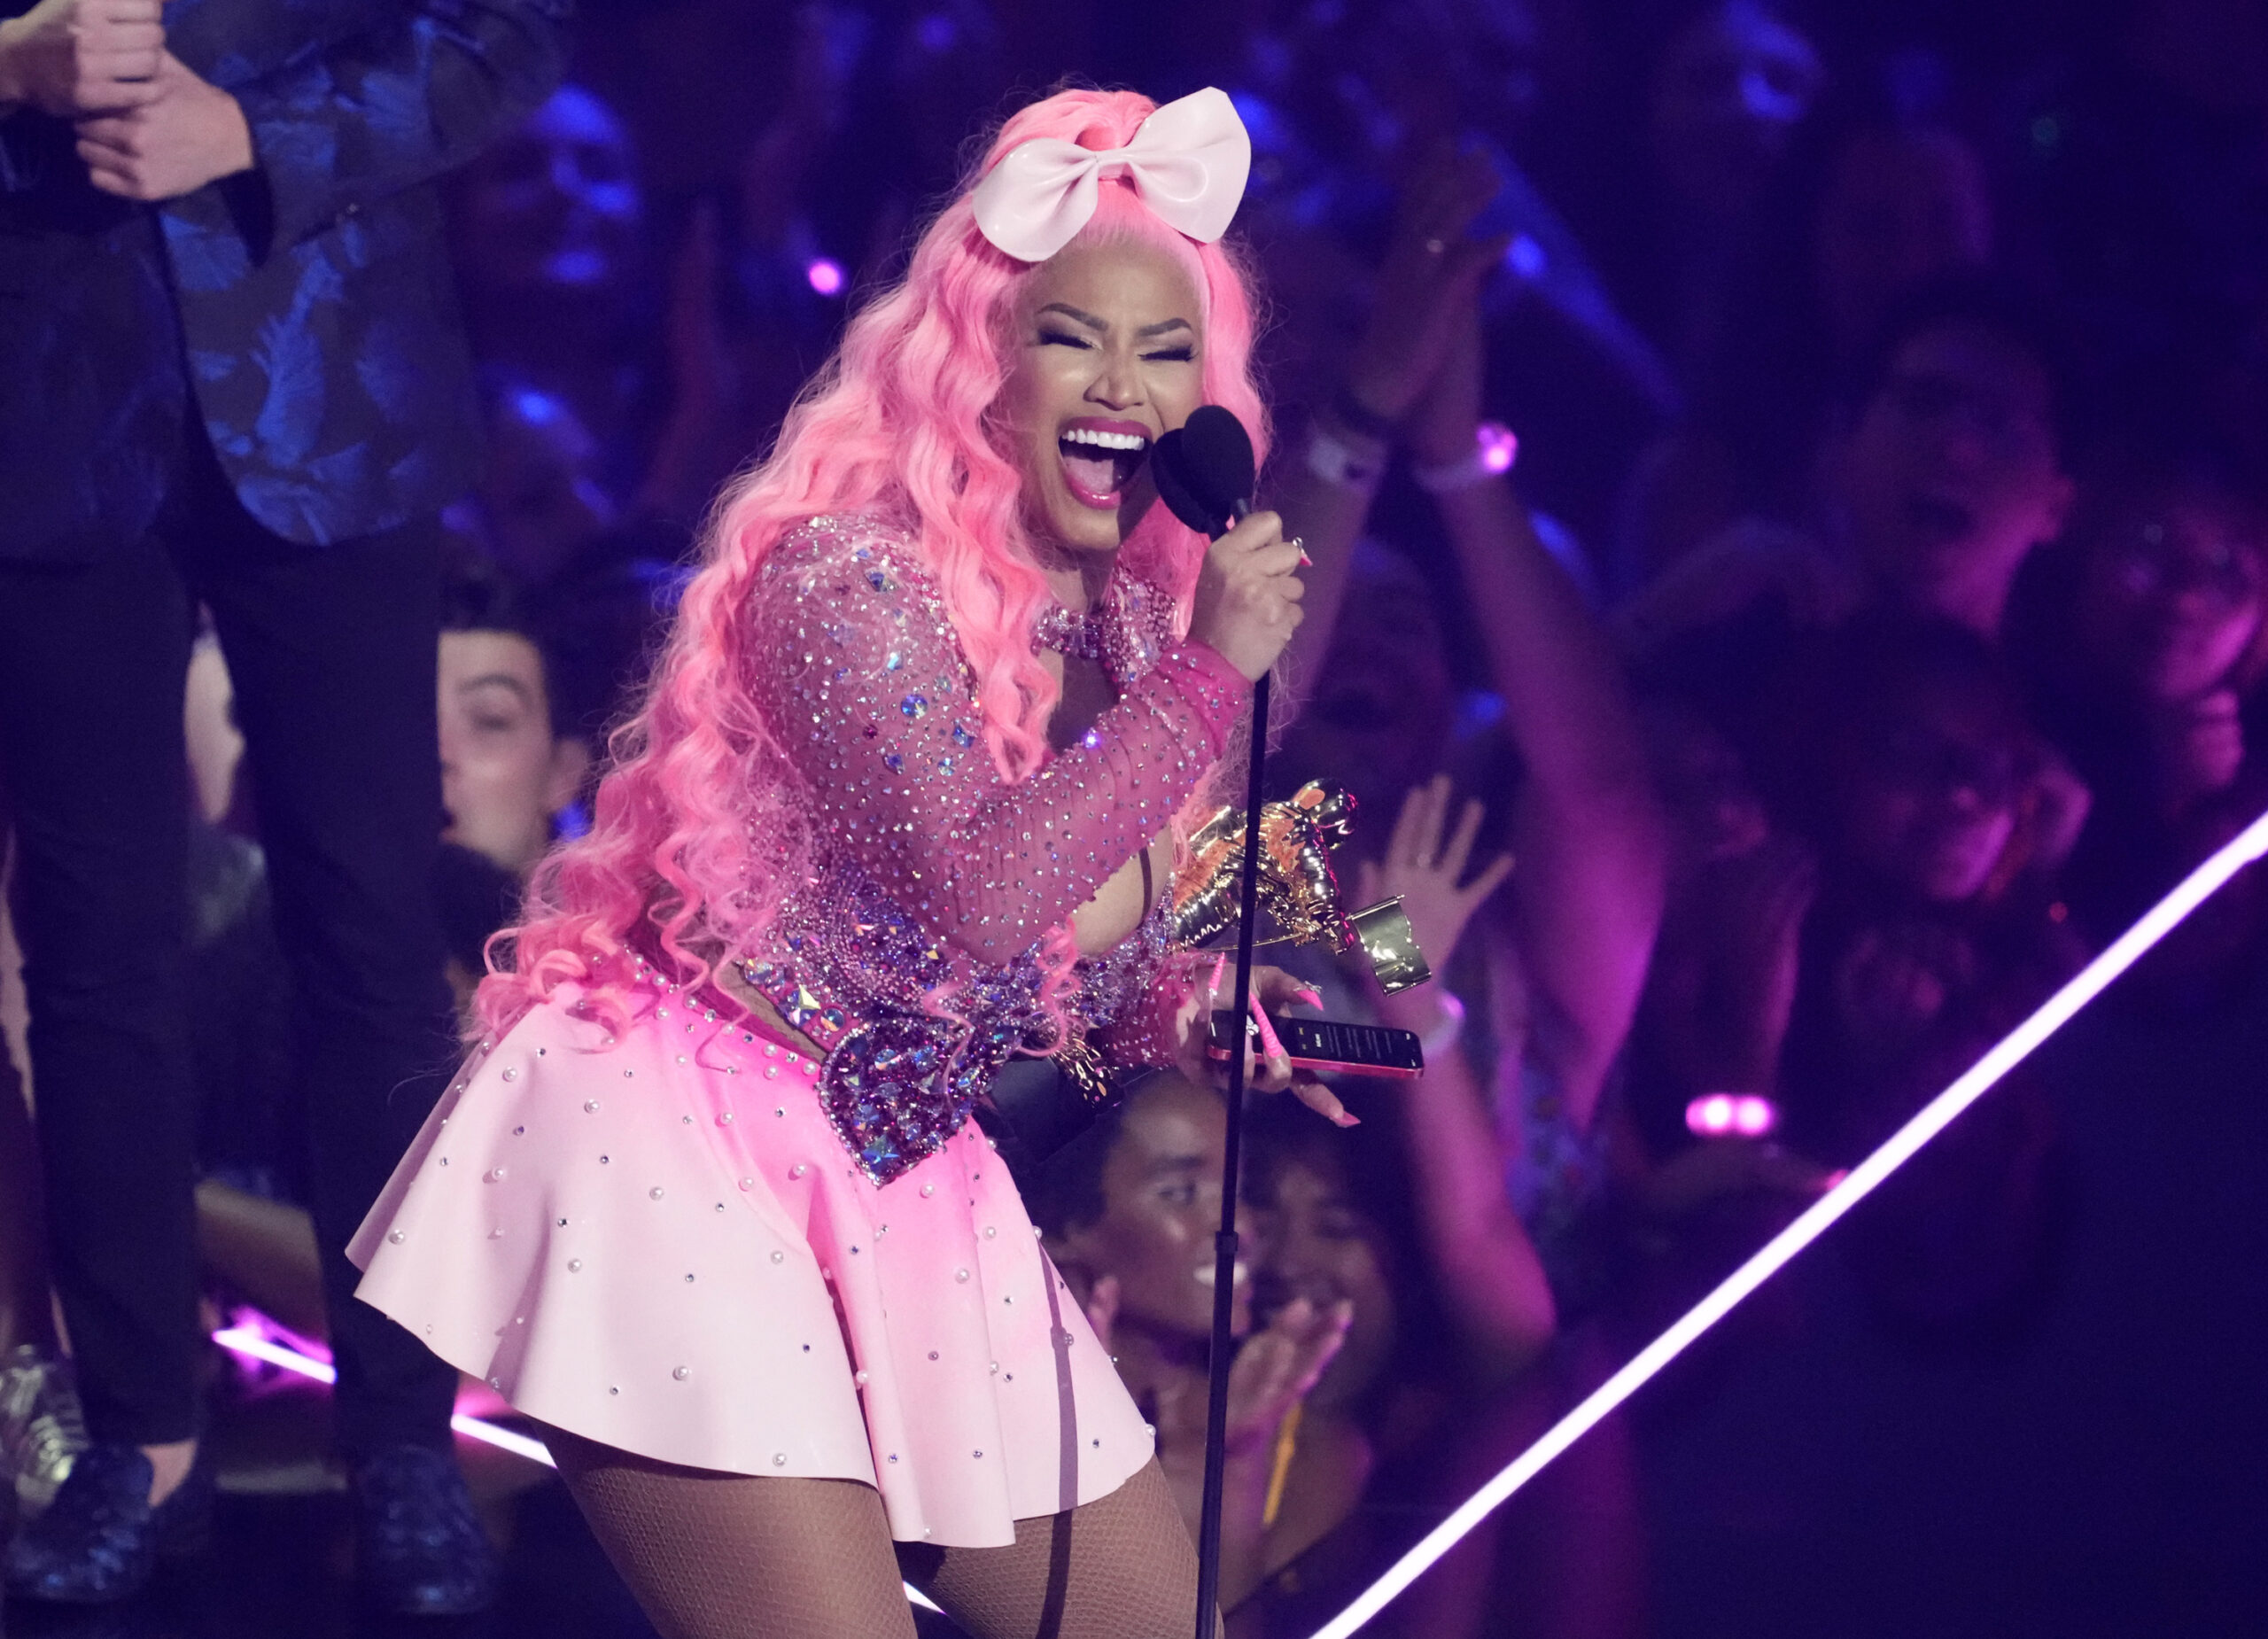 Police strive to arrest Nicki Minaj in Amsterdam for allegedly ‘carrying medication’